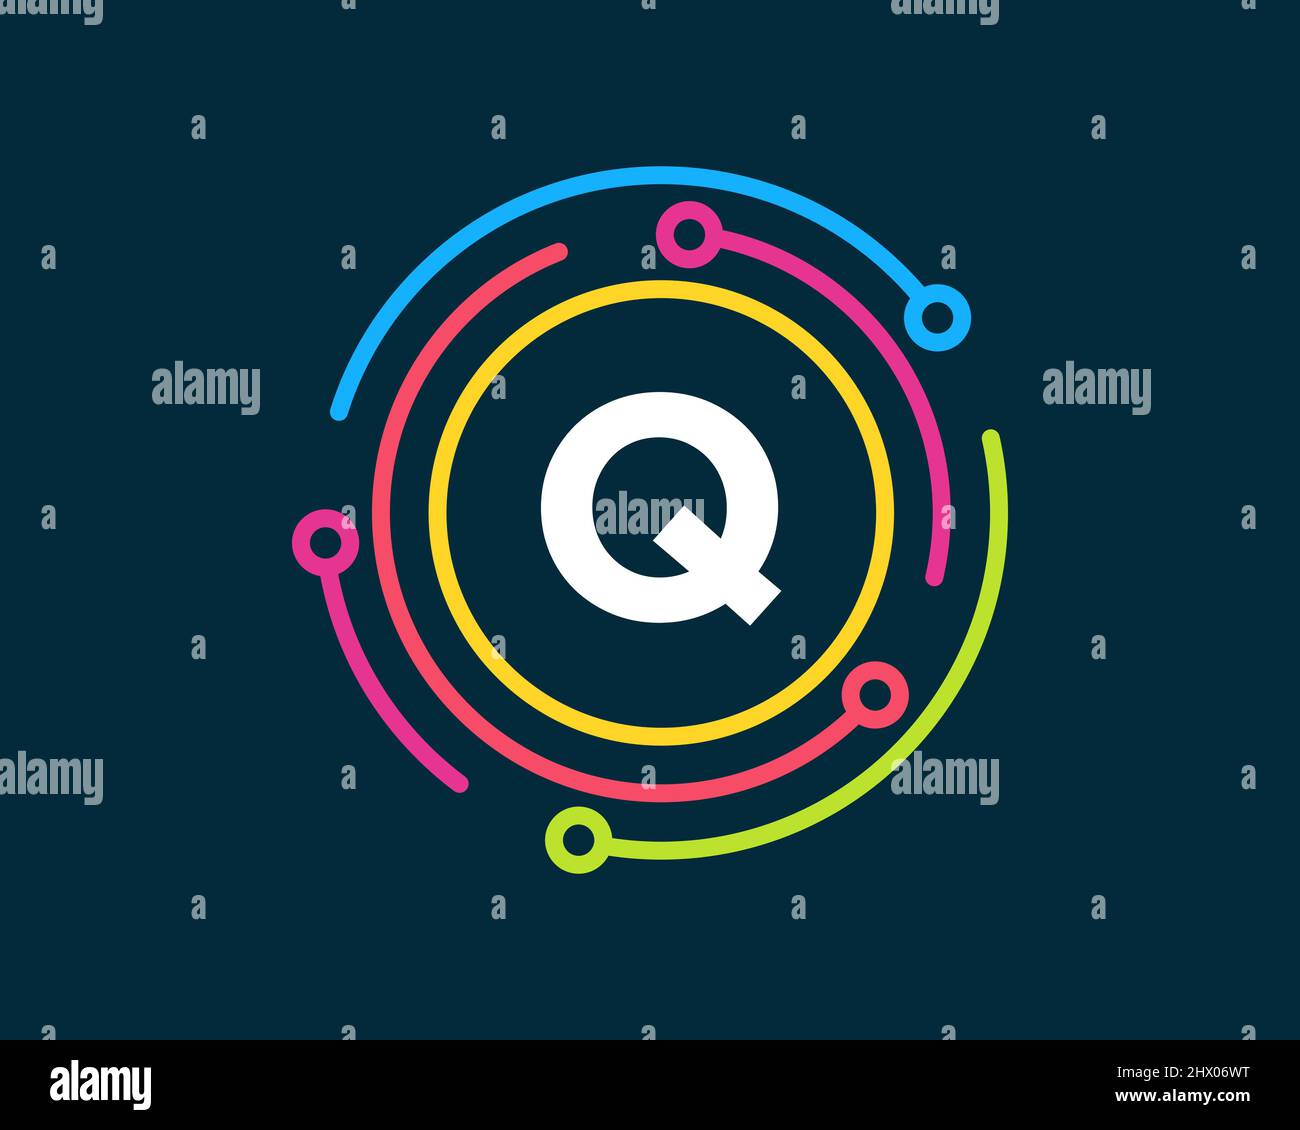 Technologie-Logo-Design mit Q-Letter-Konzept. Q-Technologie-Logo mit dem Buchstaben. Design Des Netzwerklogos Stock Vektor